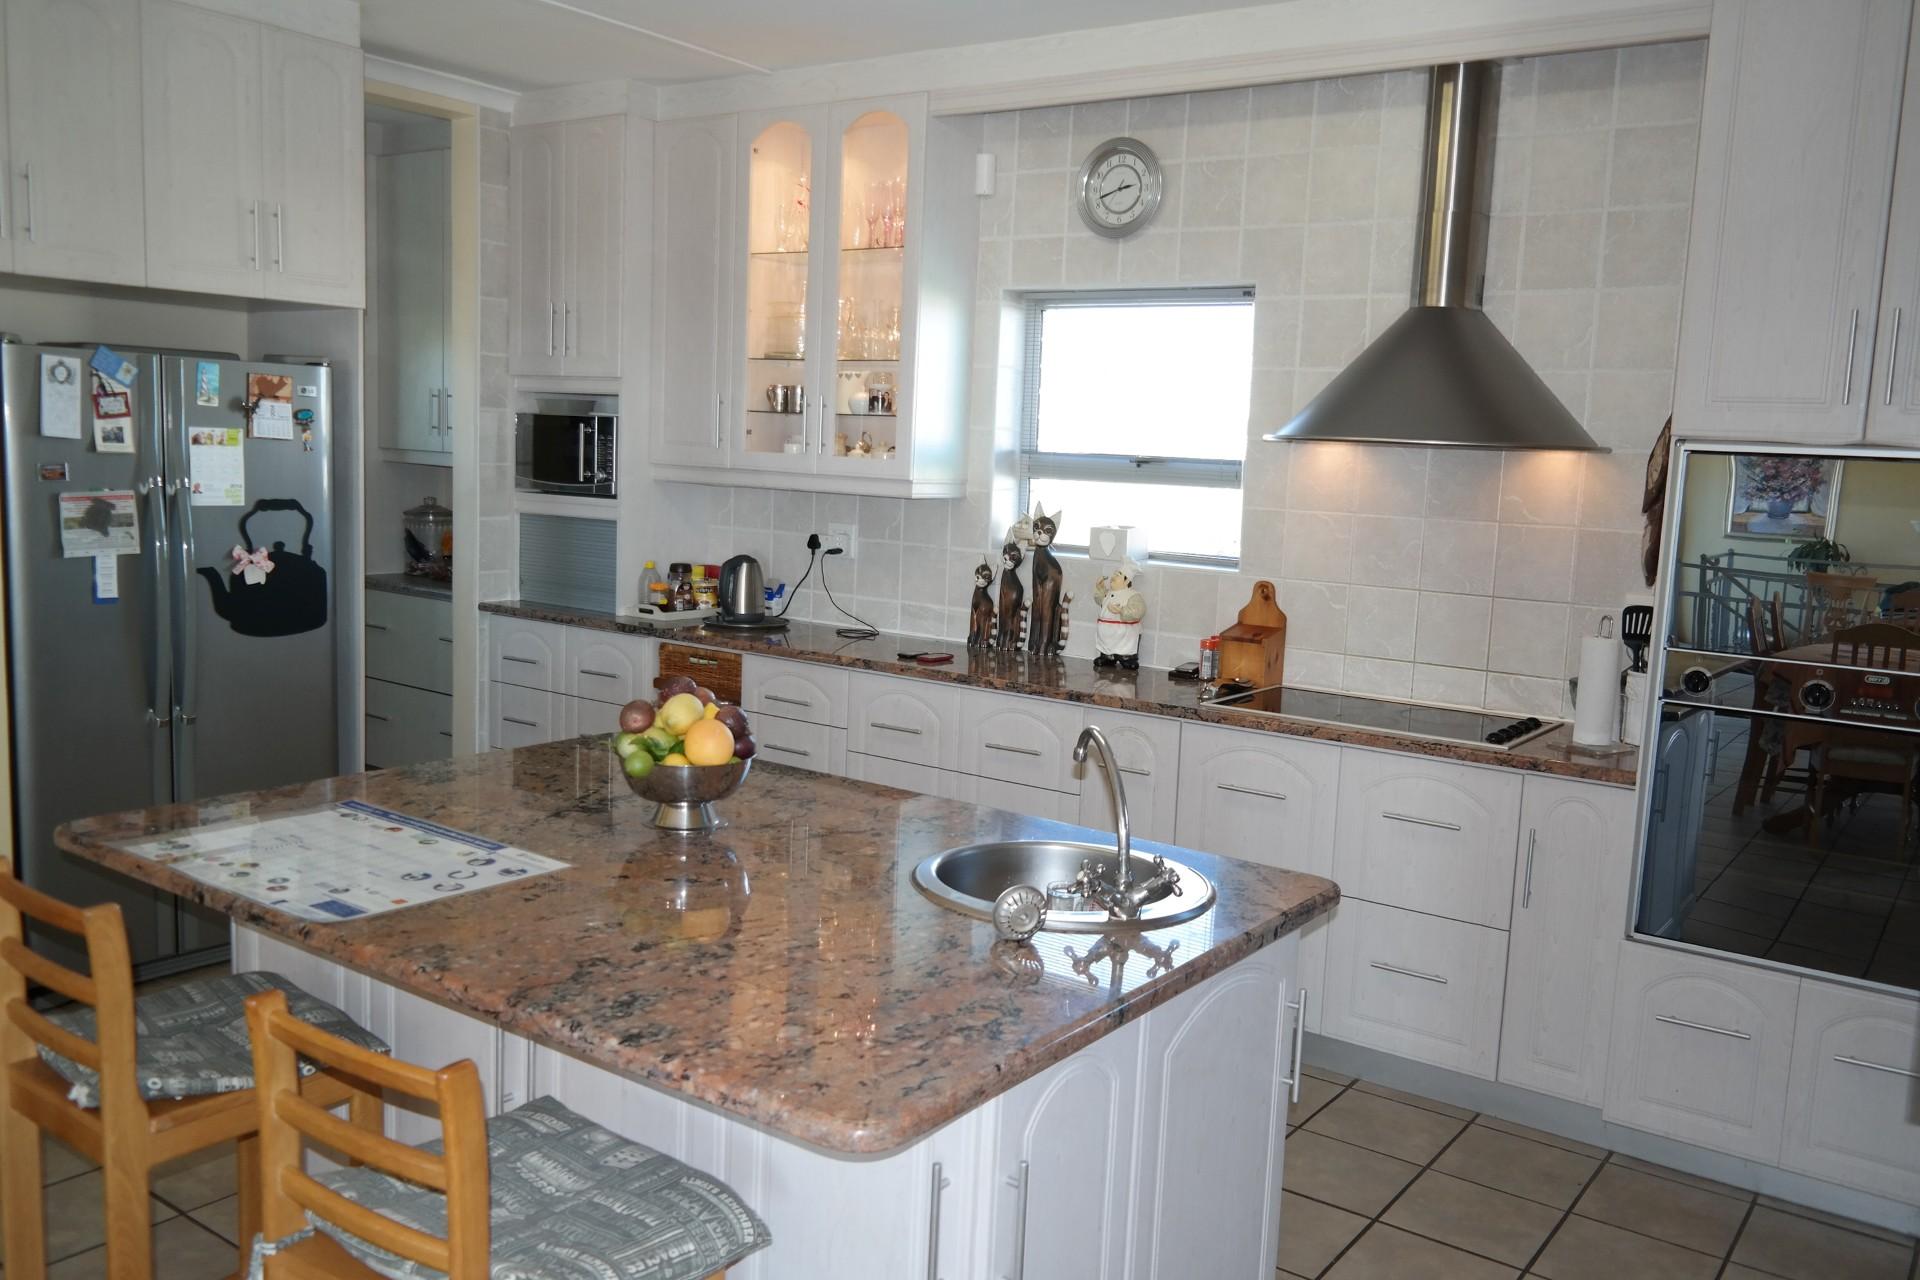 Kitchen - 63 square meters of property in Langebaan